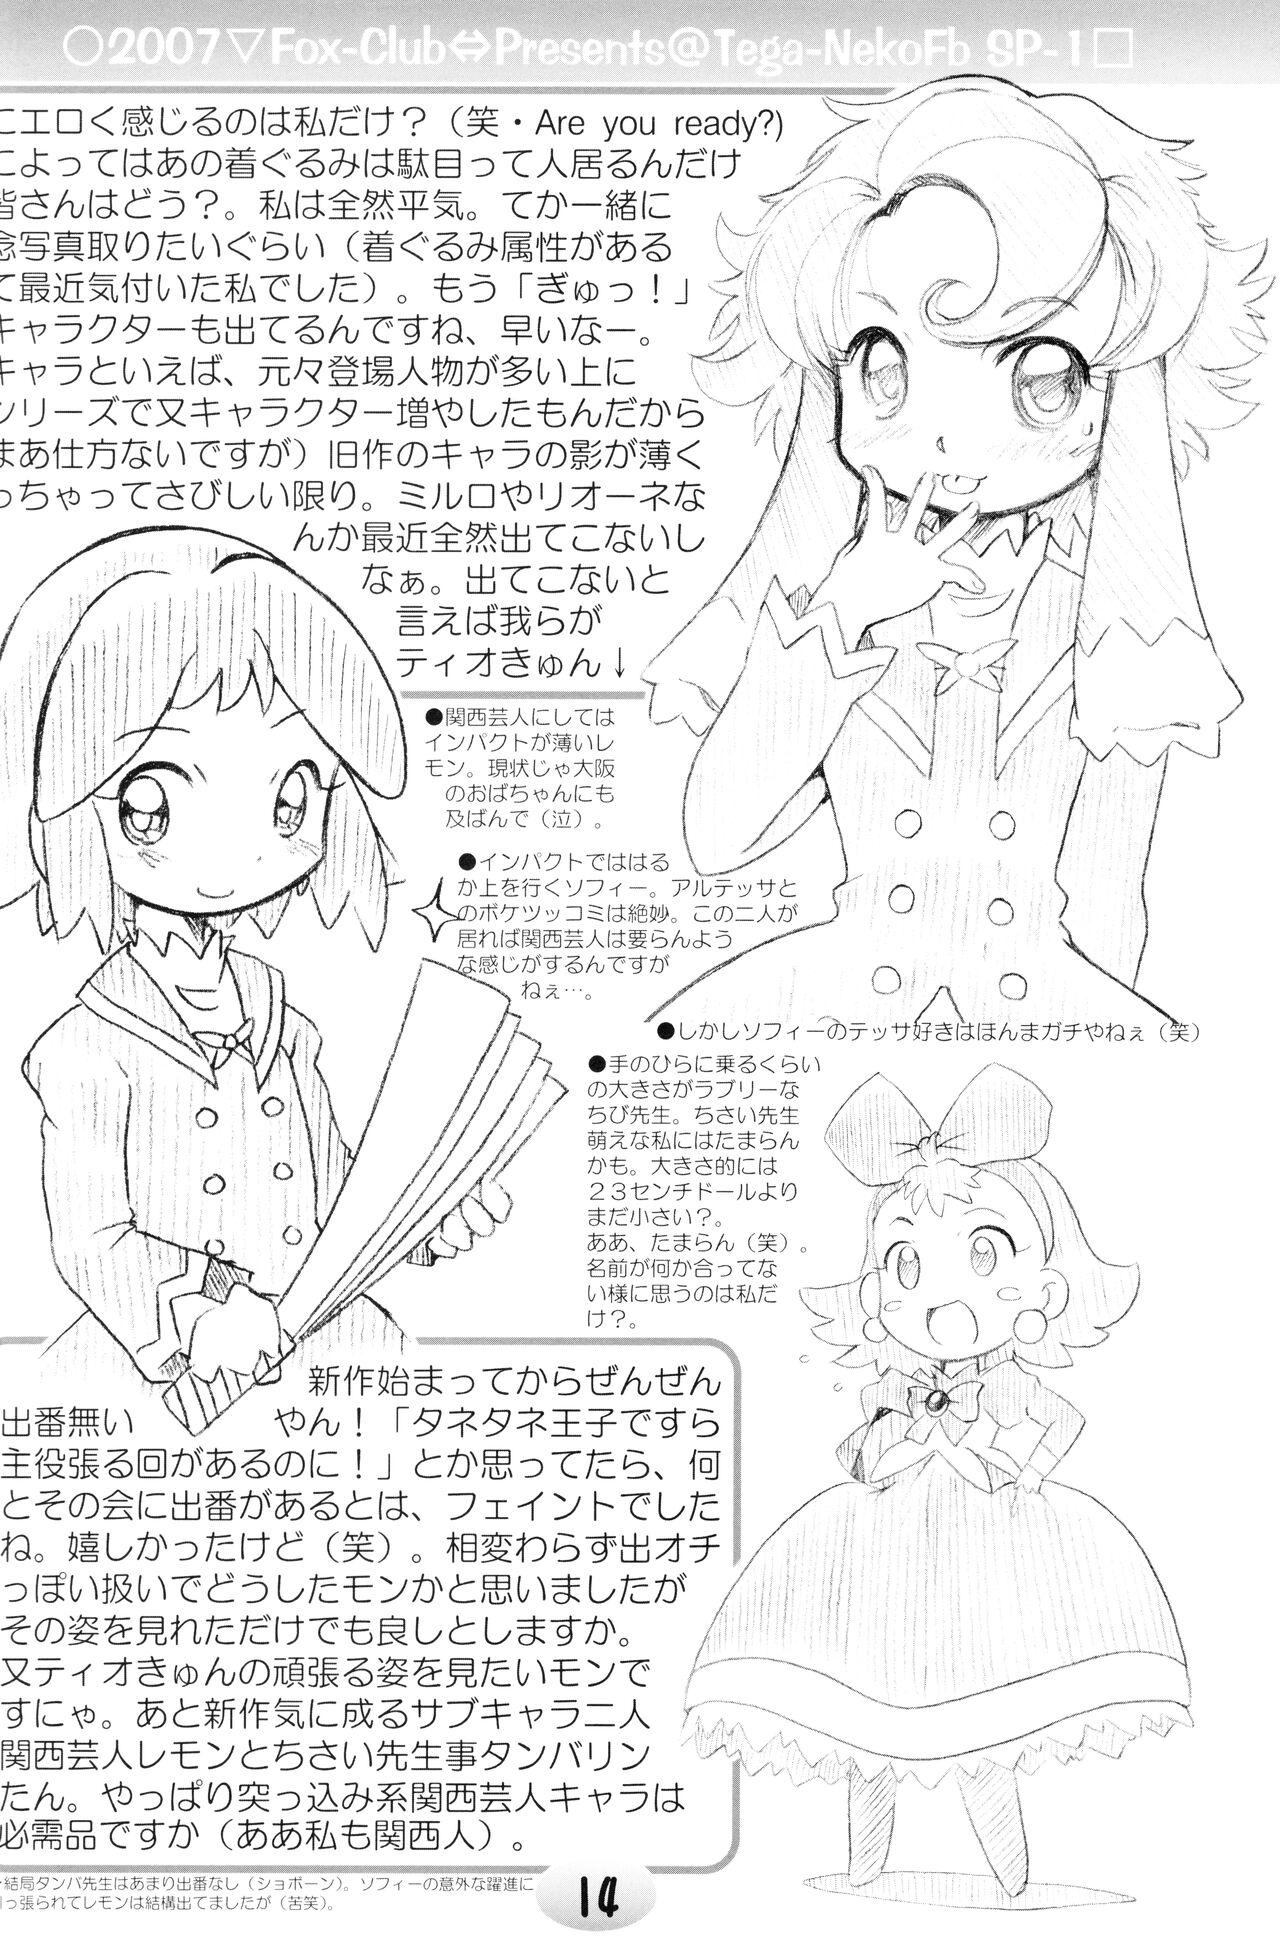 Roludo TeGa-NeKo Fb/SP Futago Hime Plus - Fushigiboshi no futagohime | twin princesses of the wonder planet Pmv - Page 12